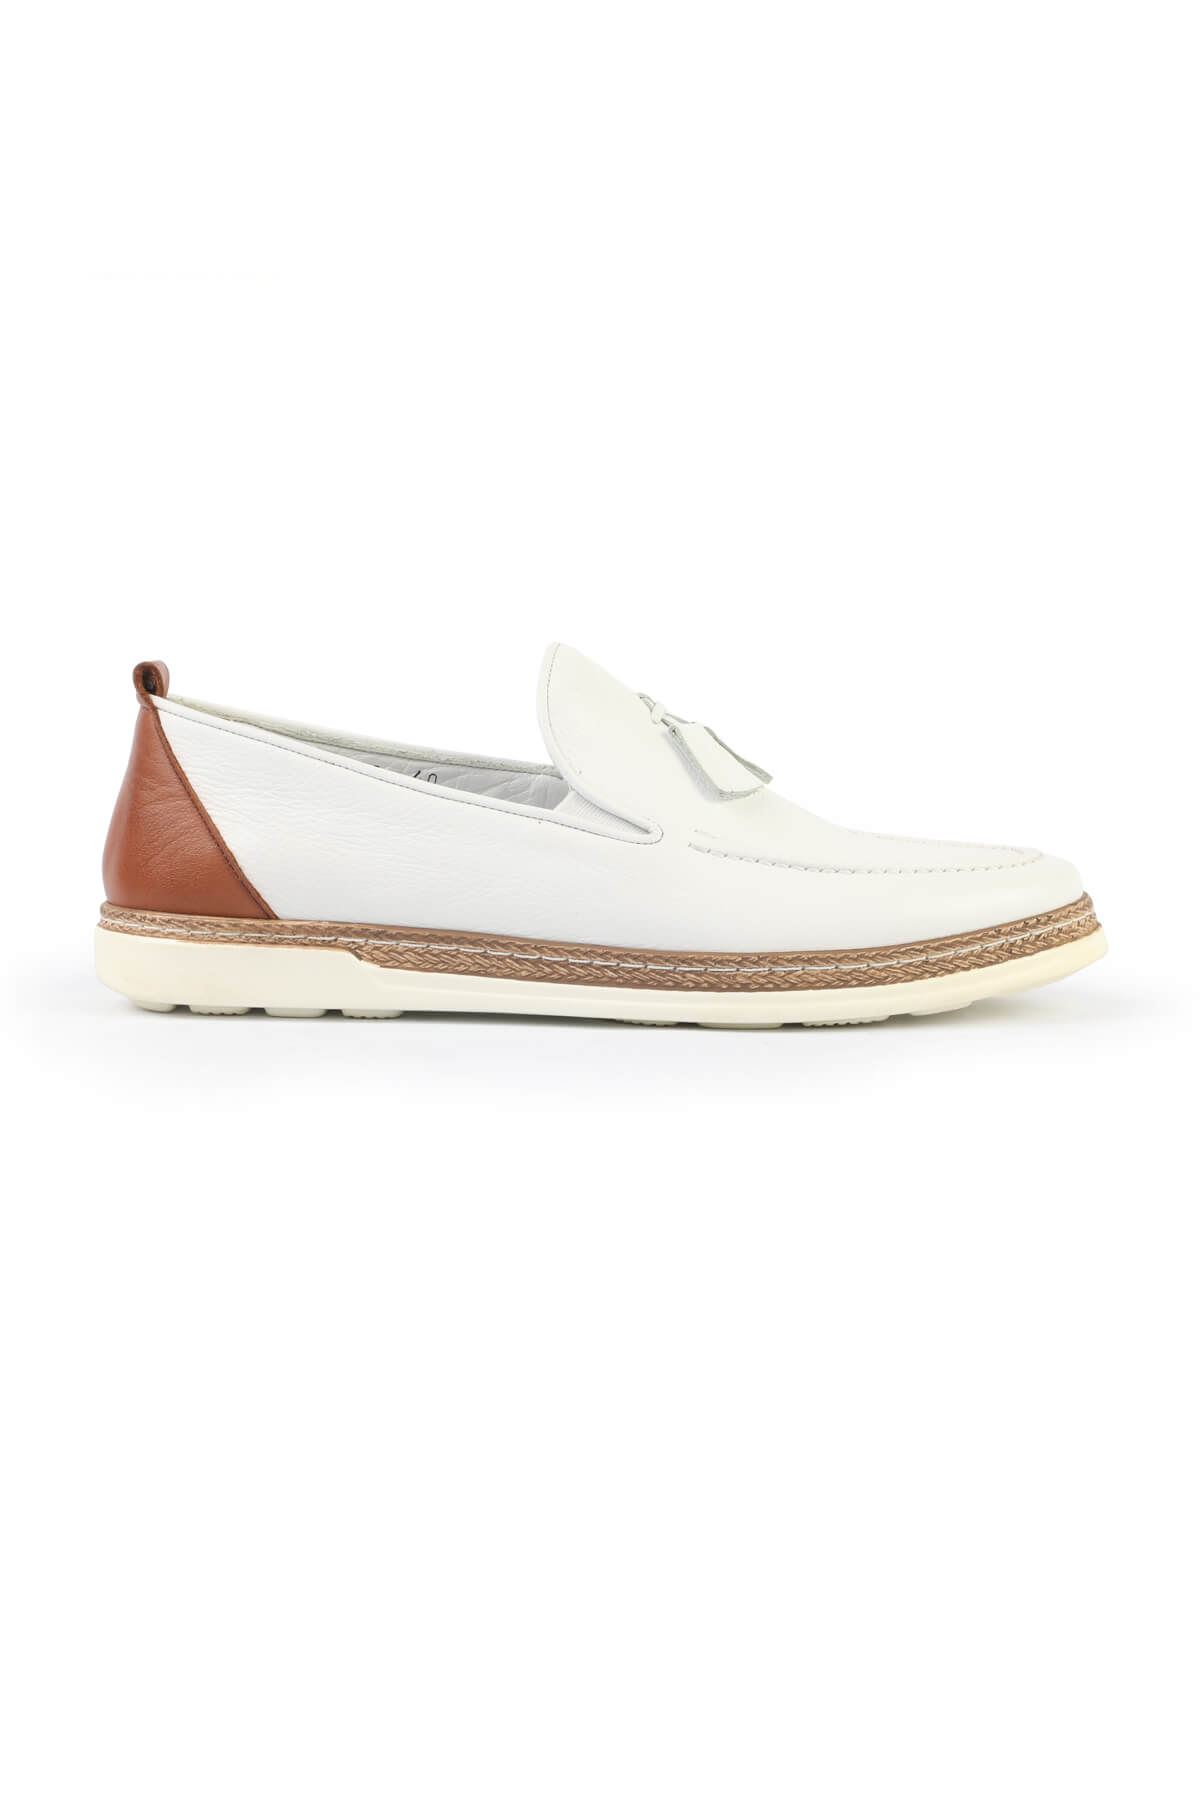 Libero C625 White Loafer Shoes